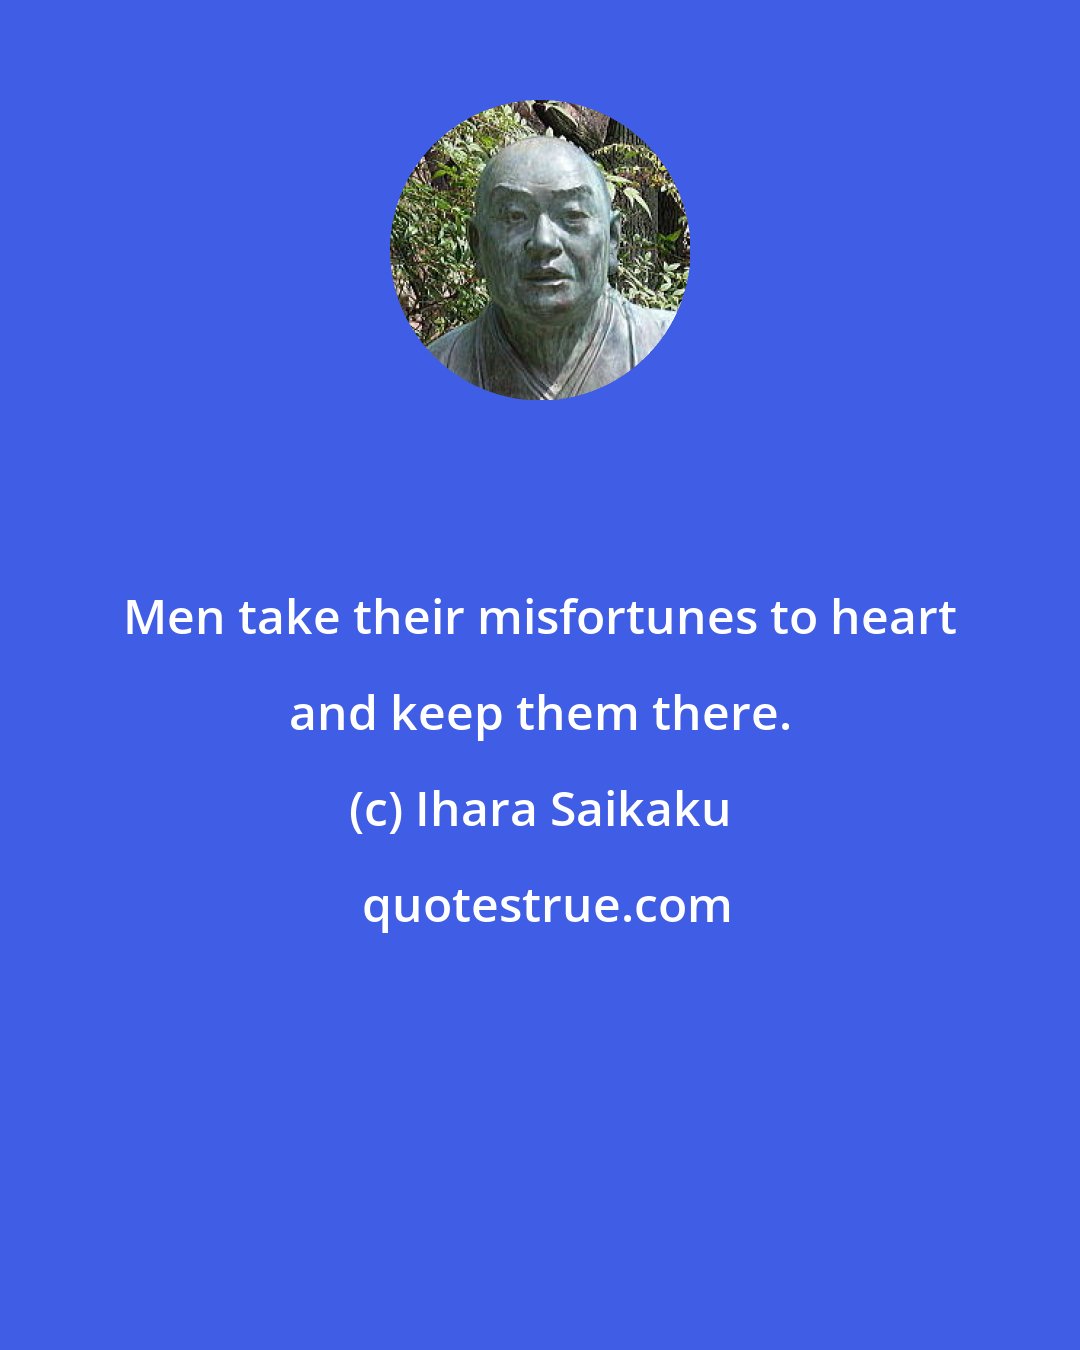 Ihara Saikaku: Men take their misfortunes to heart and keep them there.